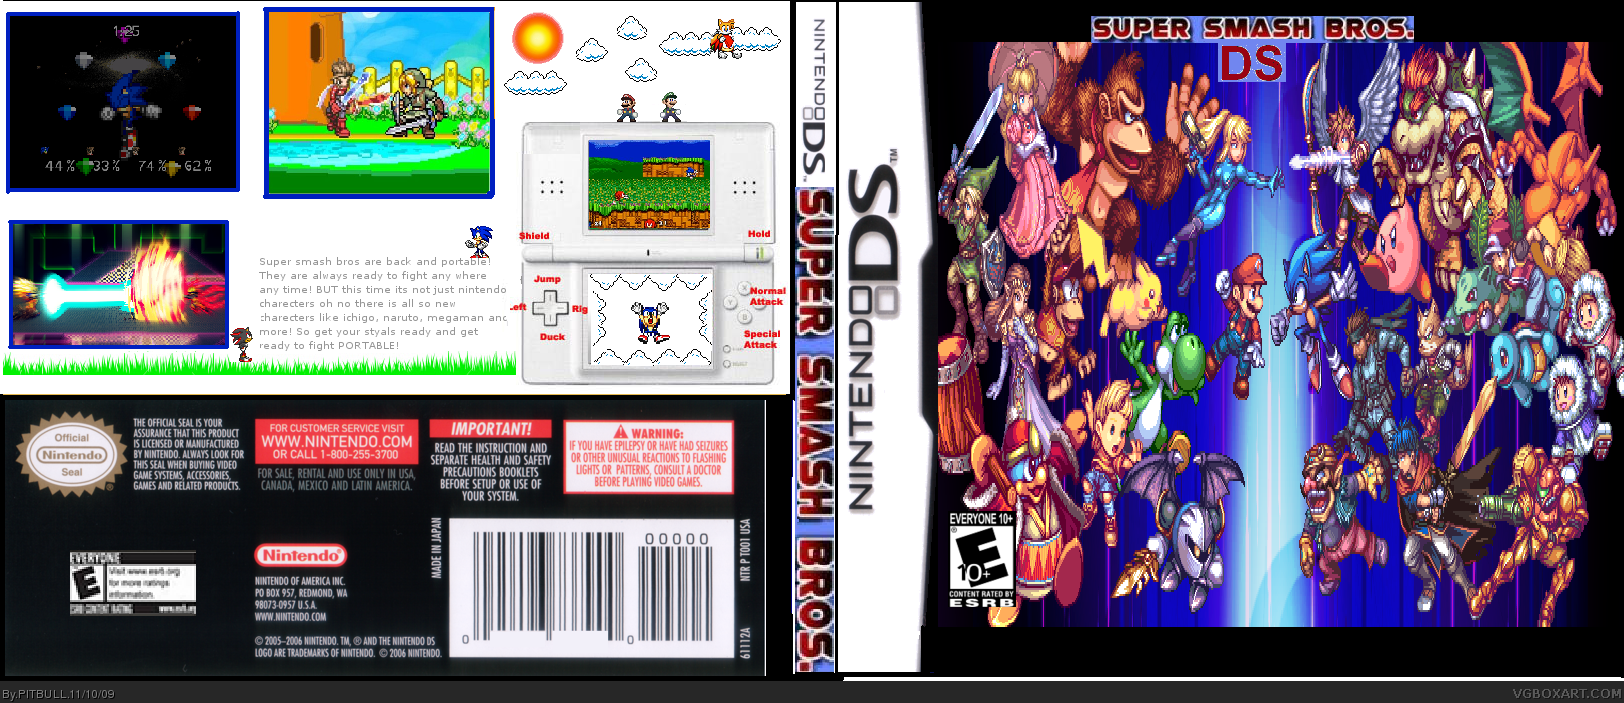 Super Smash Bros DS box cover